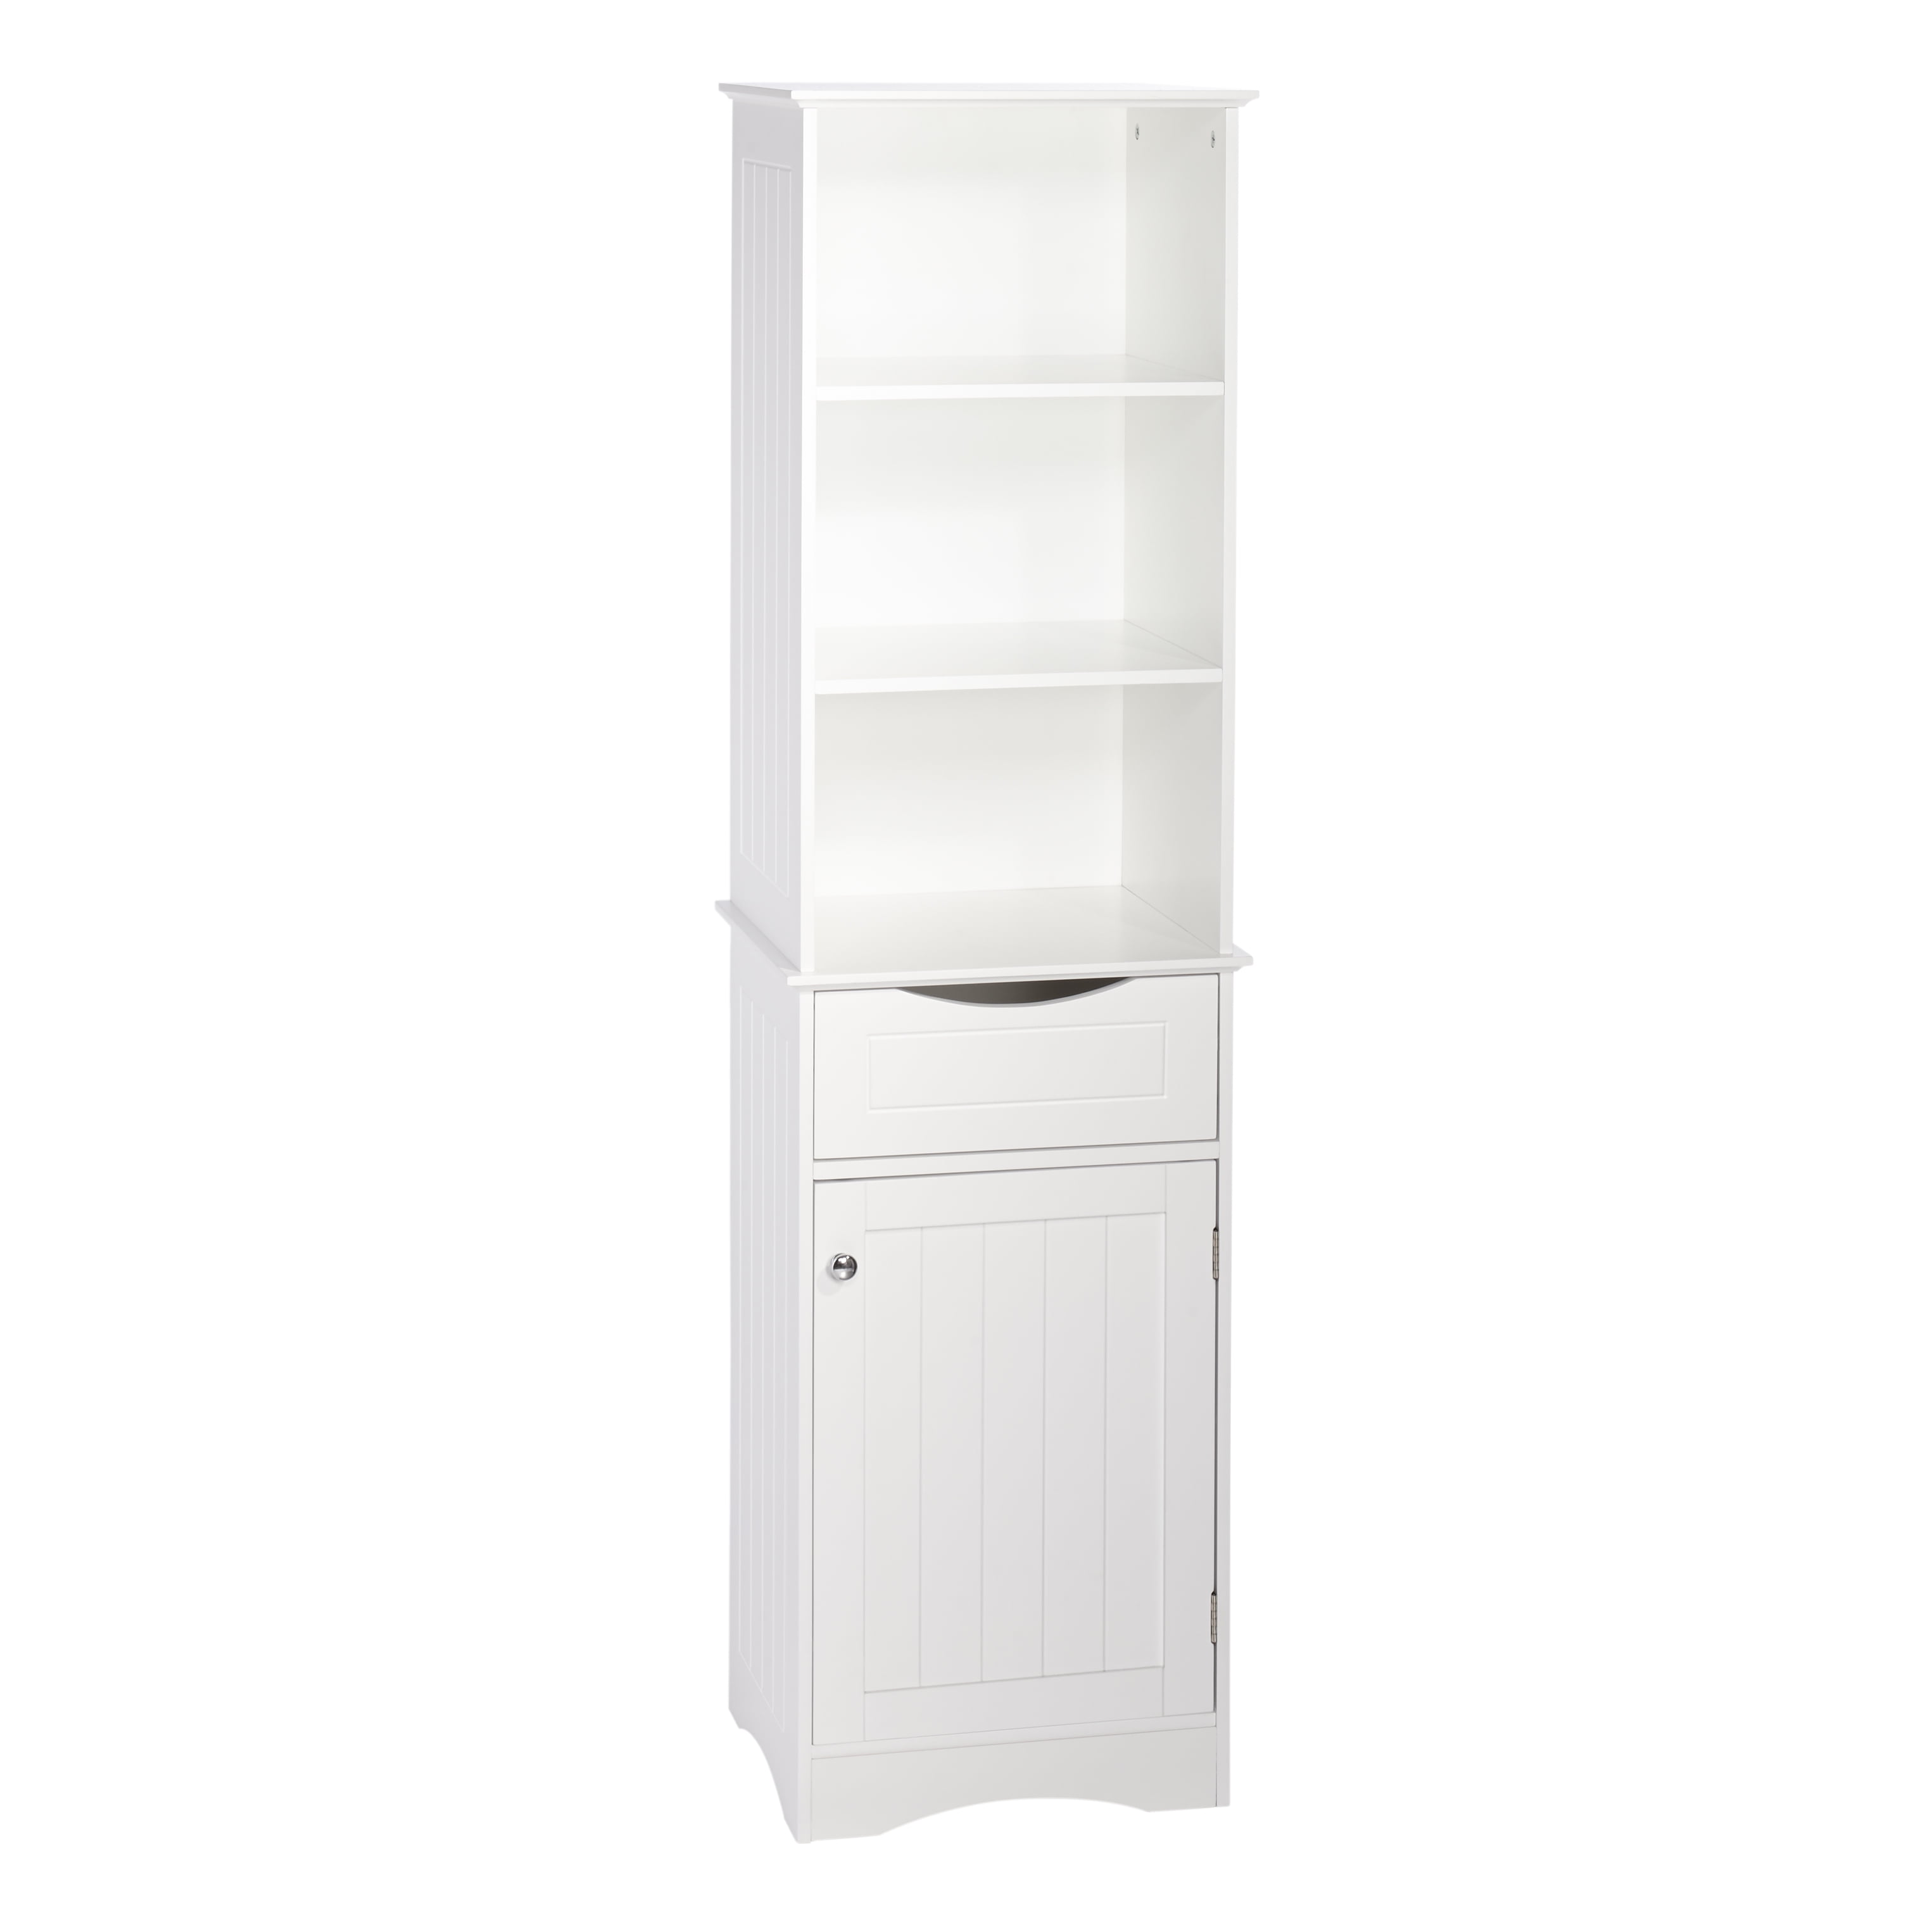 Ashland Collection Tall Linen Cabinet Bathroom Storage White